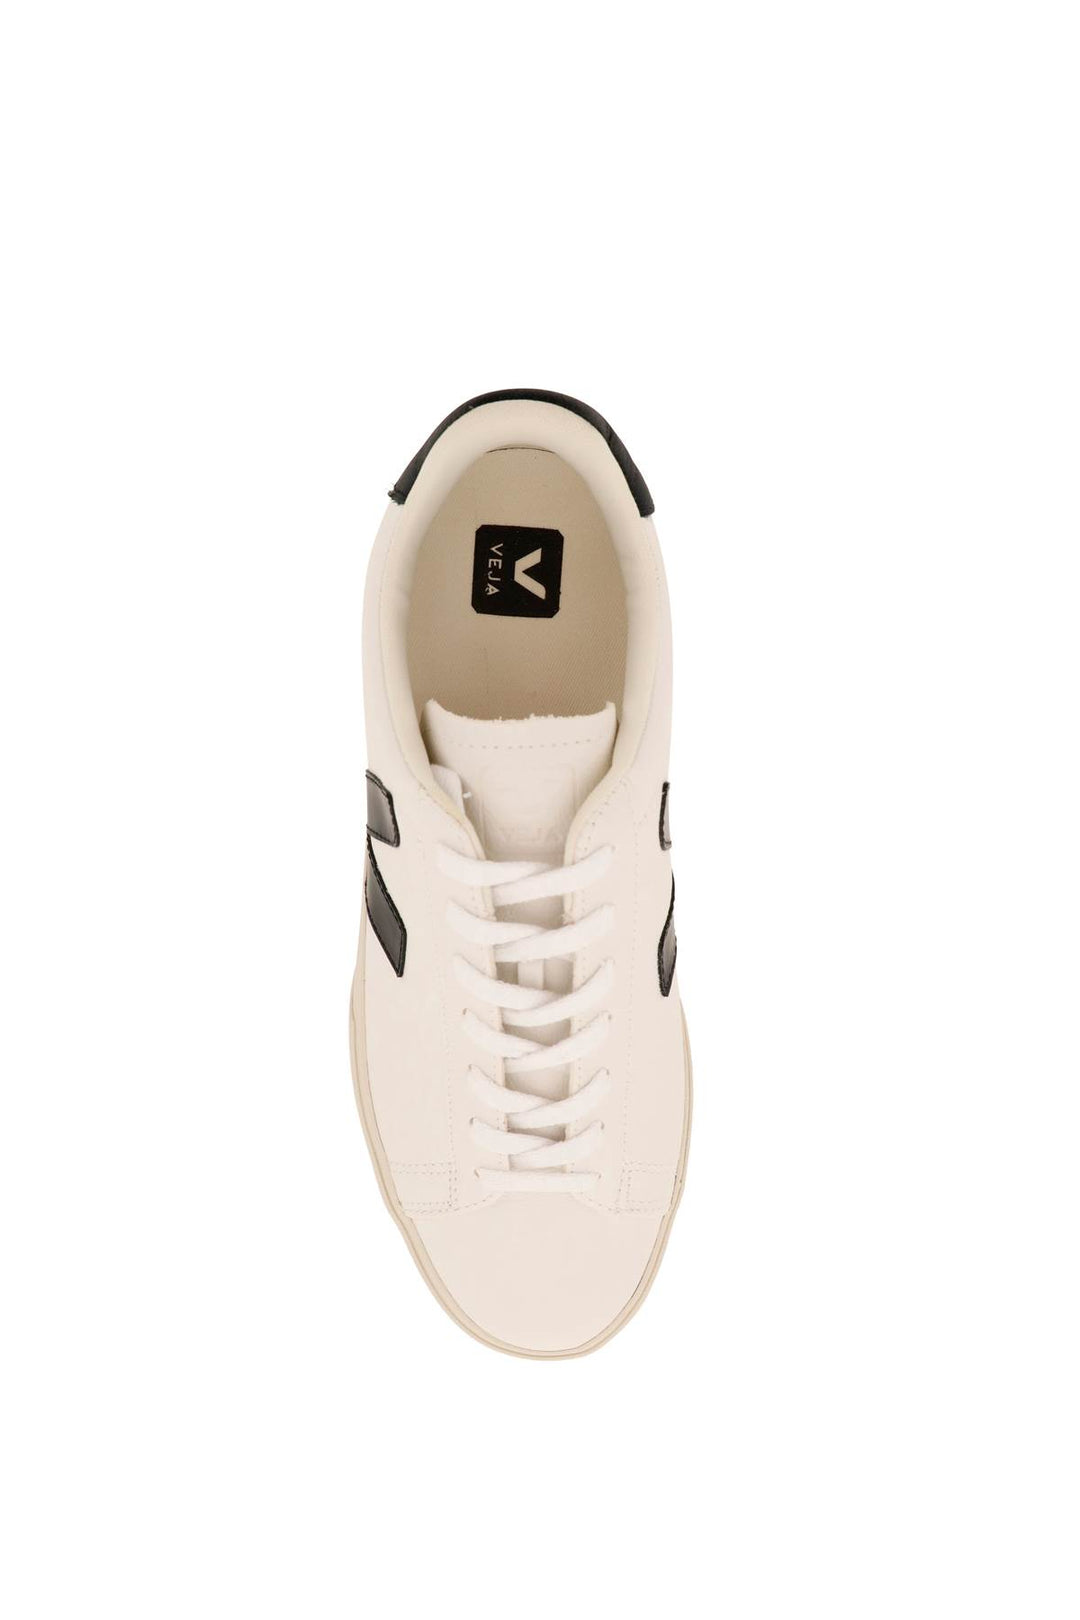 Veja Campo Sneakers   White